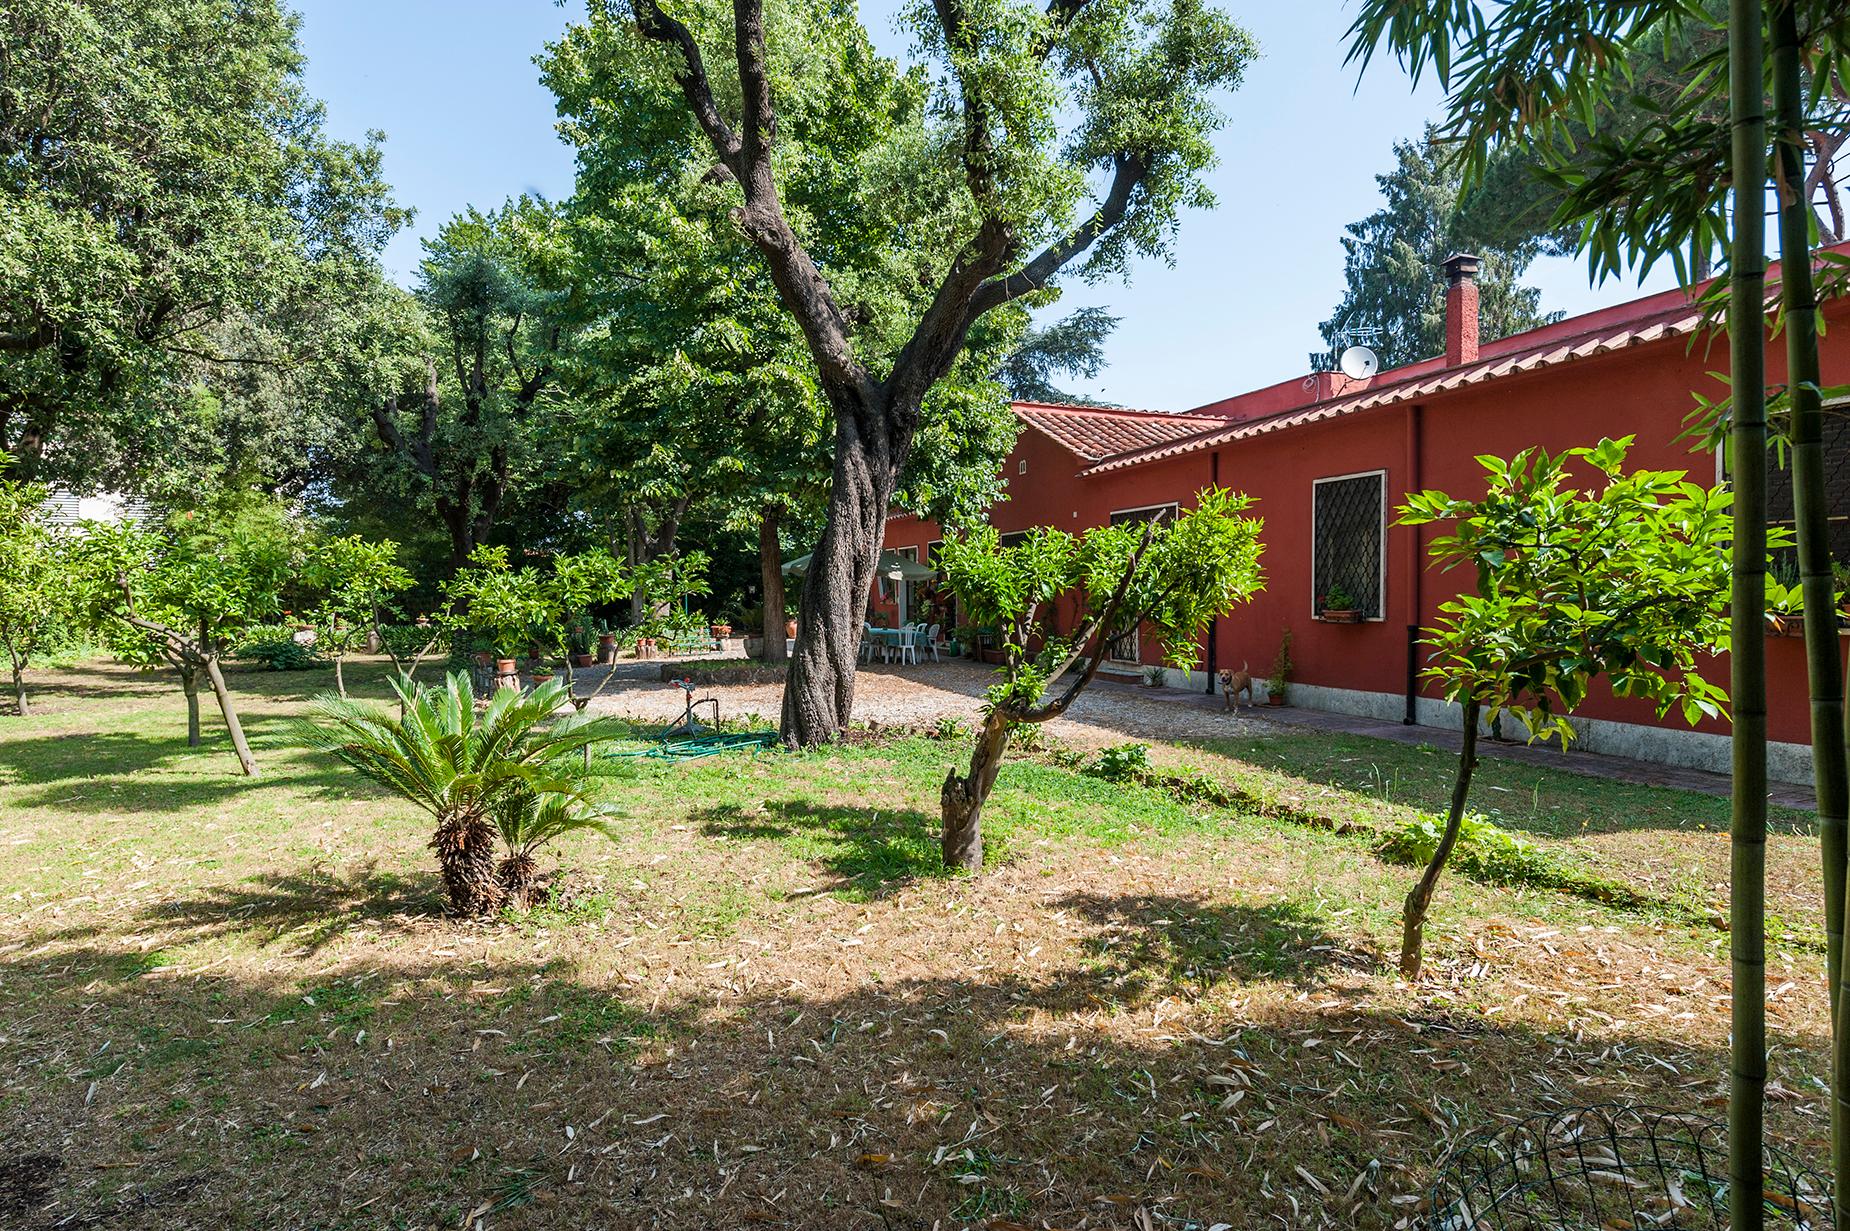                                                     Beautiful villa with large garden near Via Appia Antica                                                     - 6